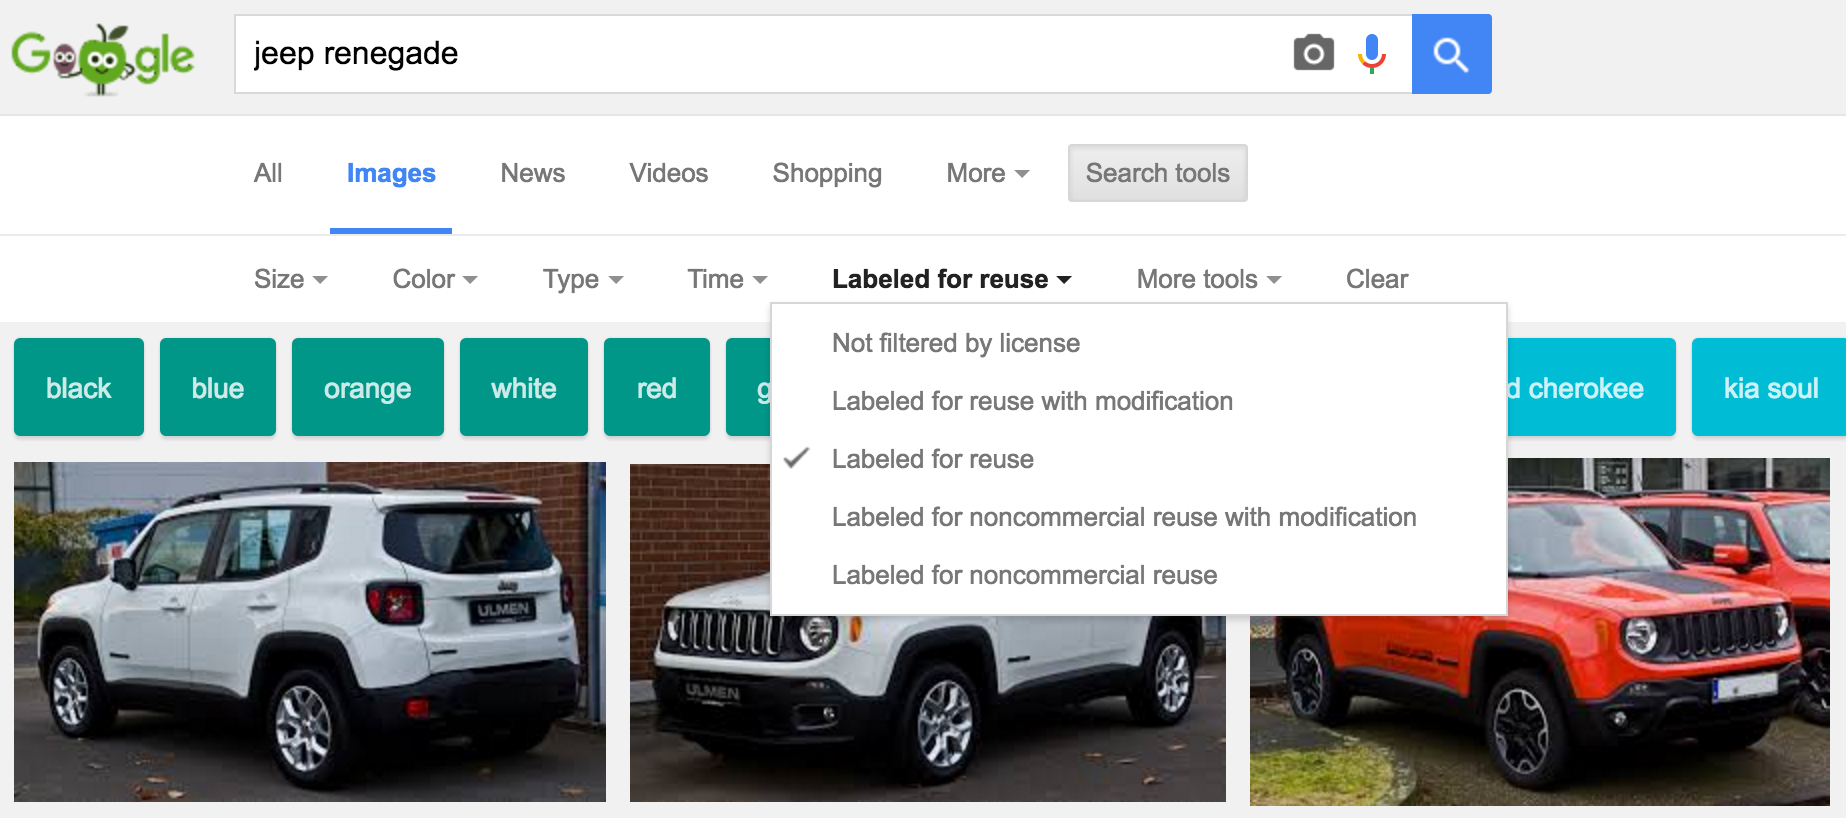 jeep-image-search-usage